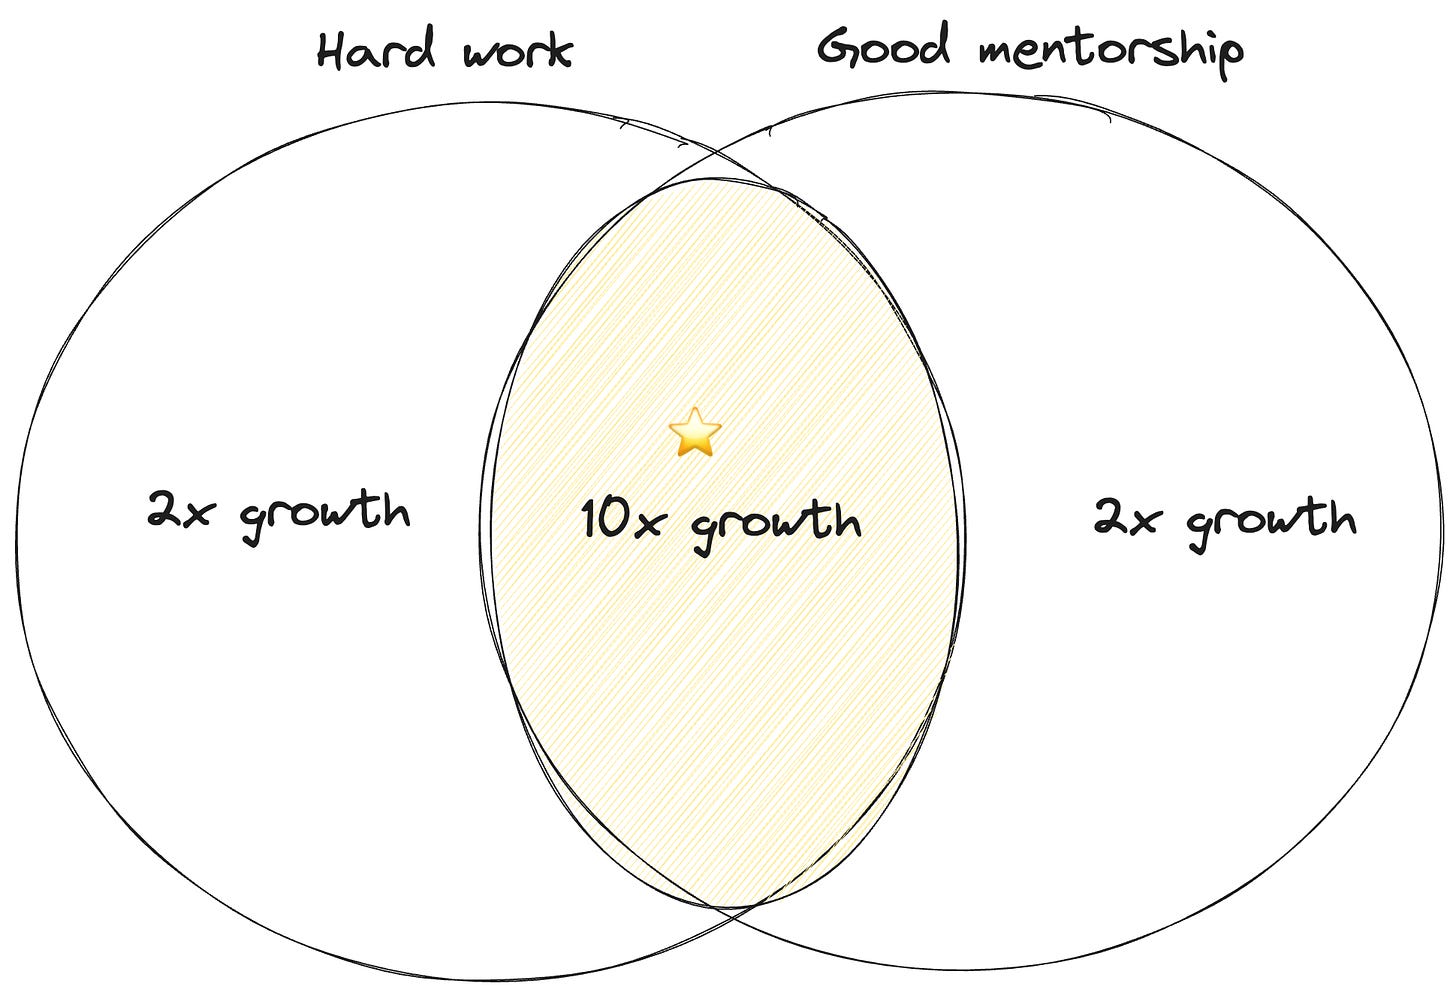 Hard work alone is 2x growth. Good mentorship alone is 2x growth. Putting them together is 10x growth